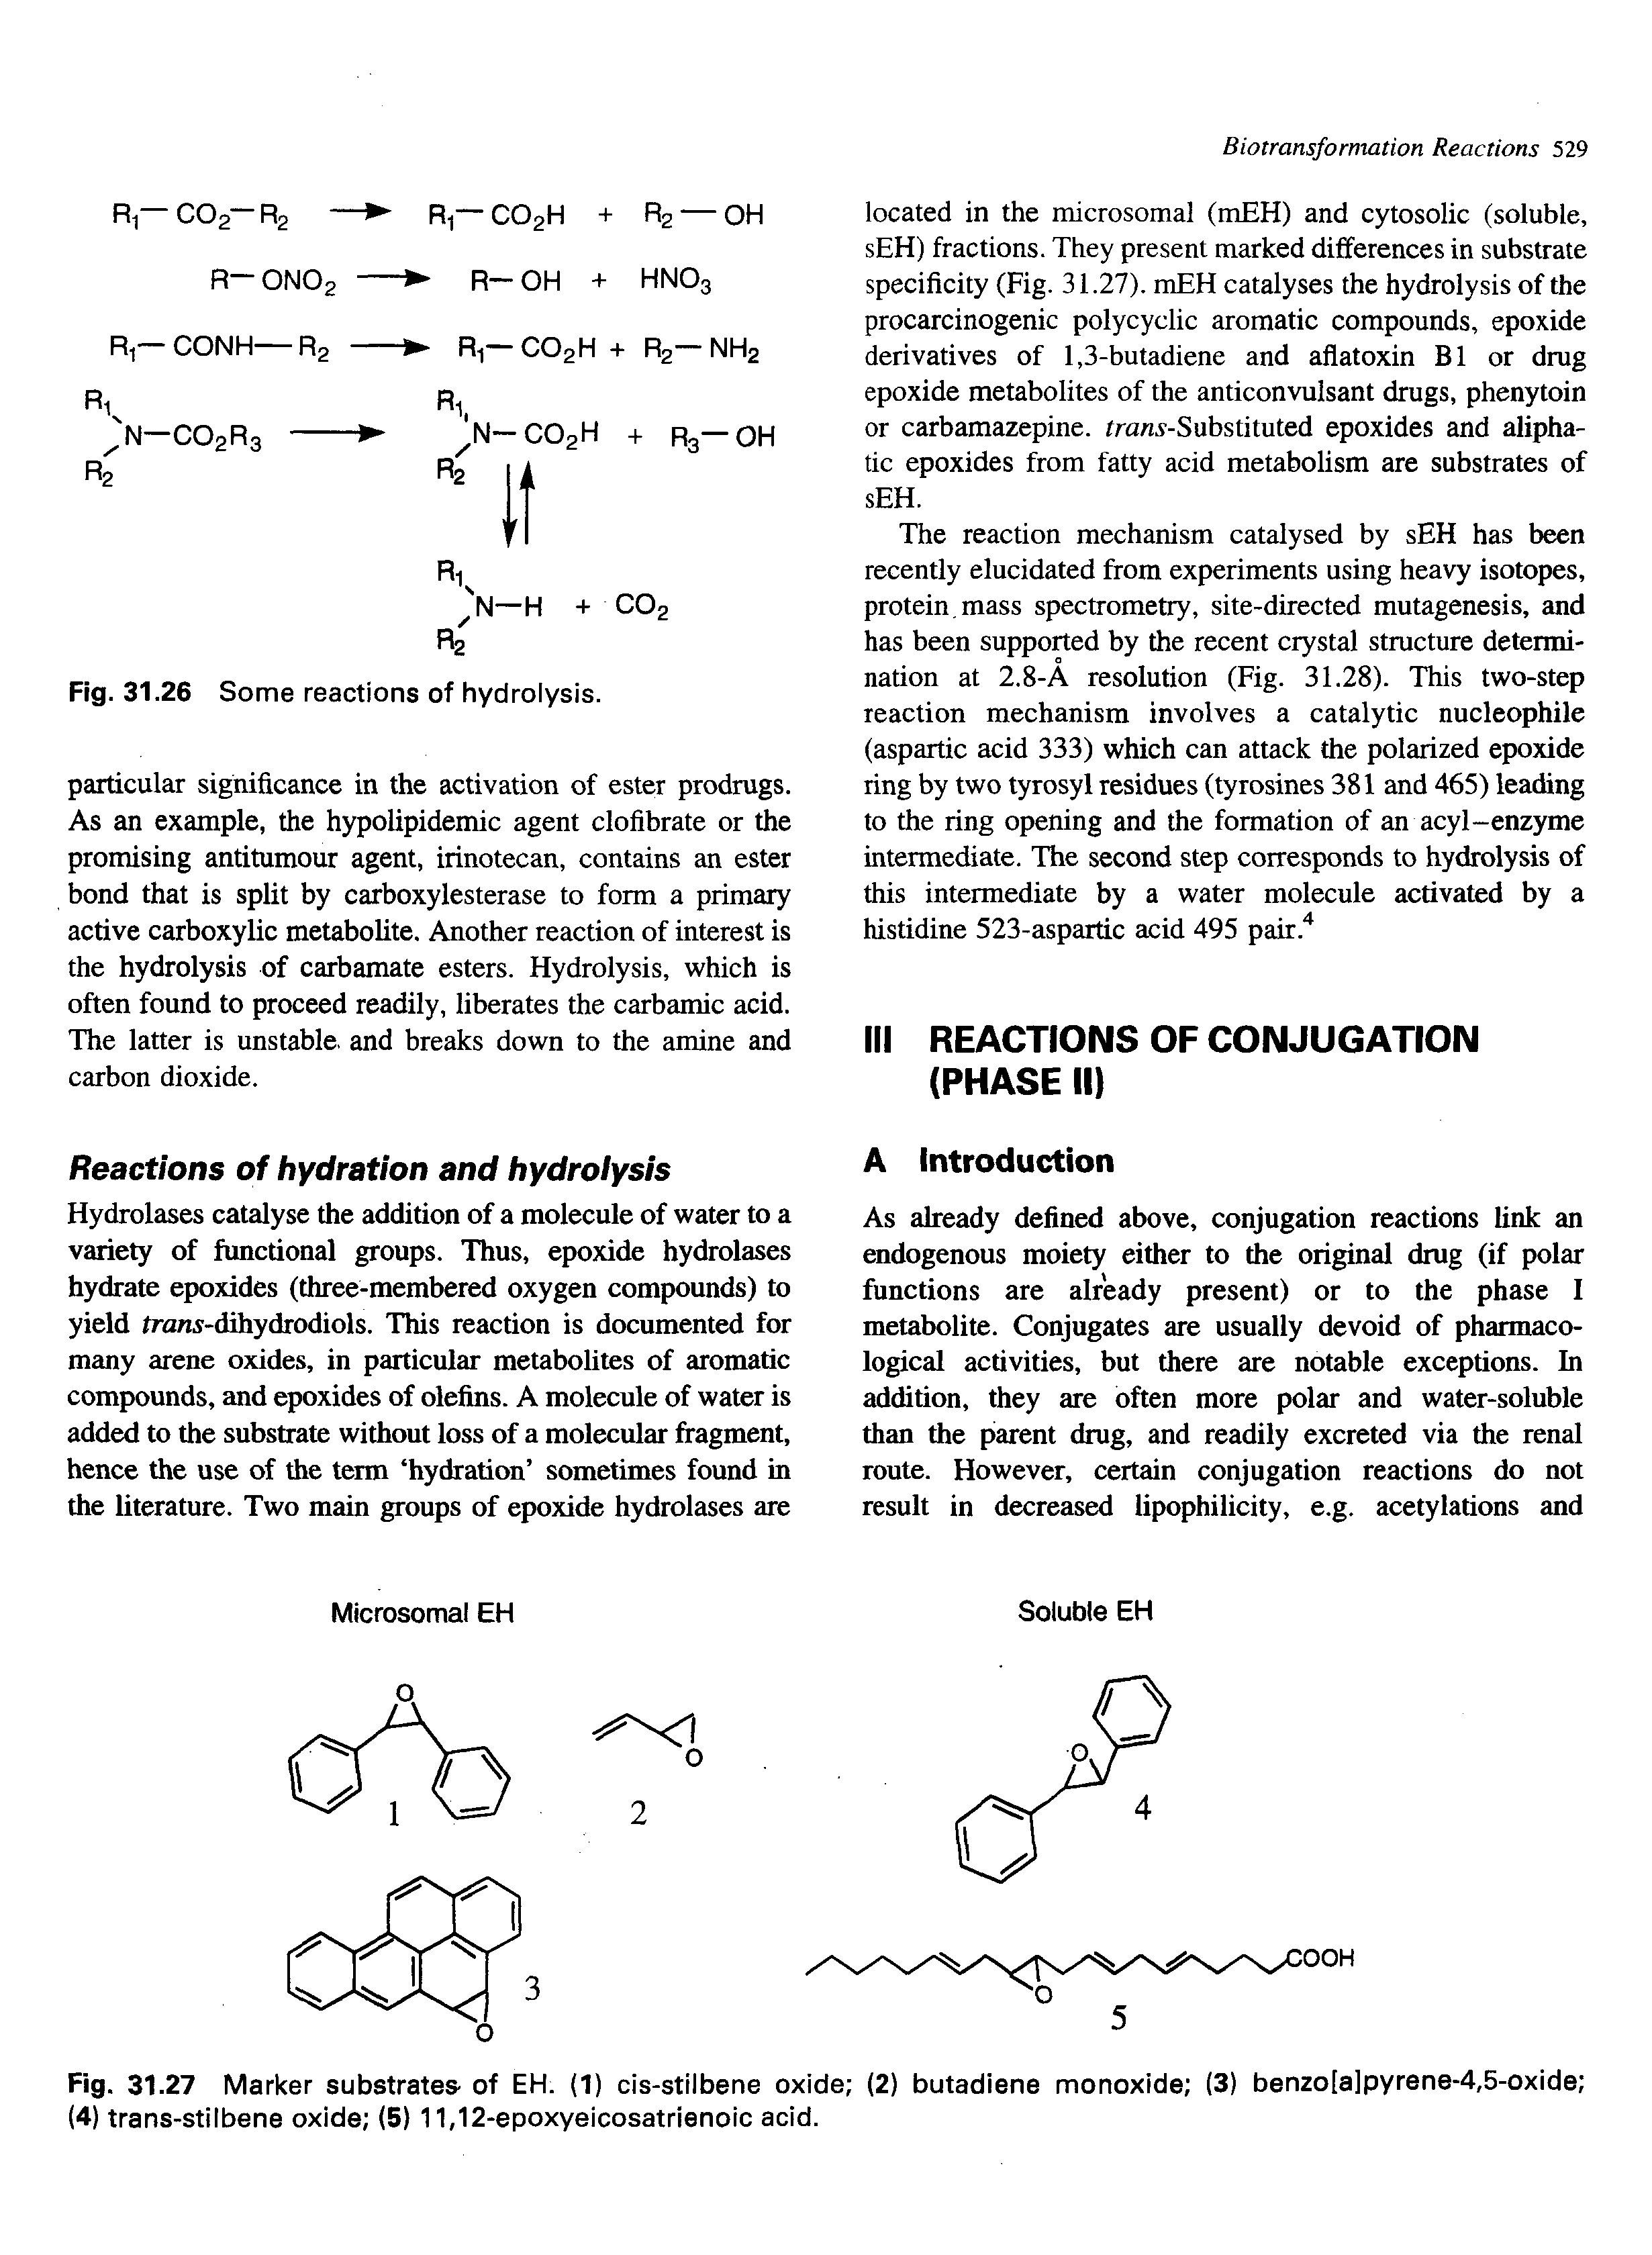 Fig. 31.27 Marker substrates- of EH. (1) cis-stilbene oxide (2) butadiene monoxide (3) benzo[a]pyrene-4,5-oxide (4) trans-stilbene oxide (5) 11,12-epoxyeicosatrienoic acid.